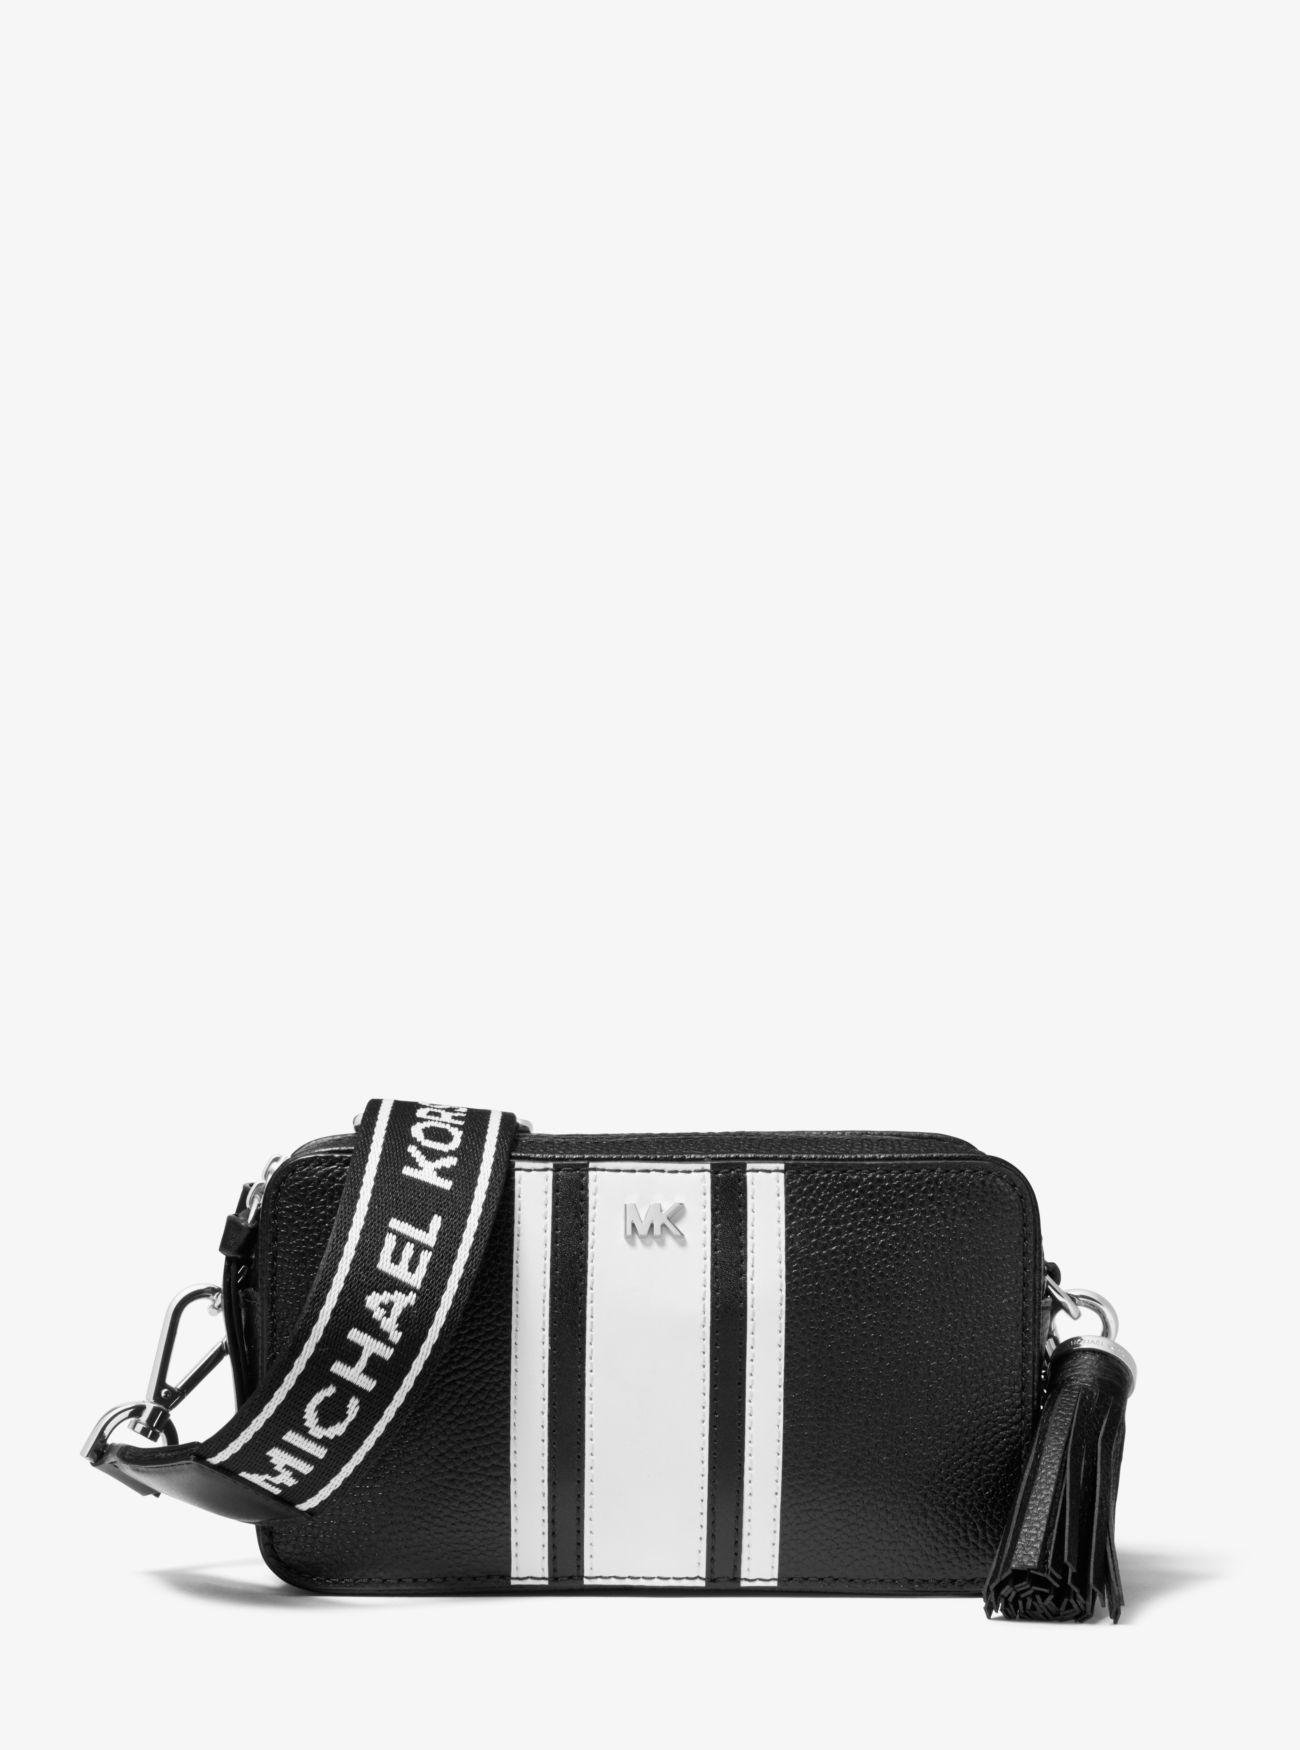 black and white michael kors handbag